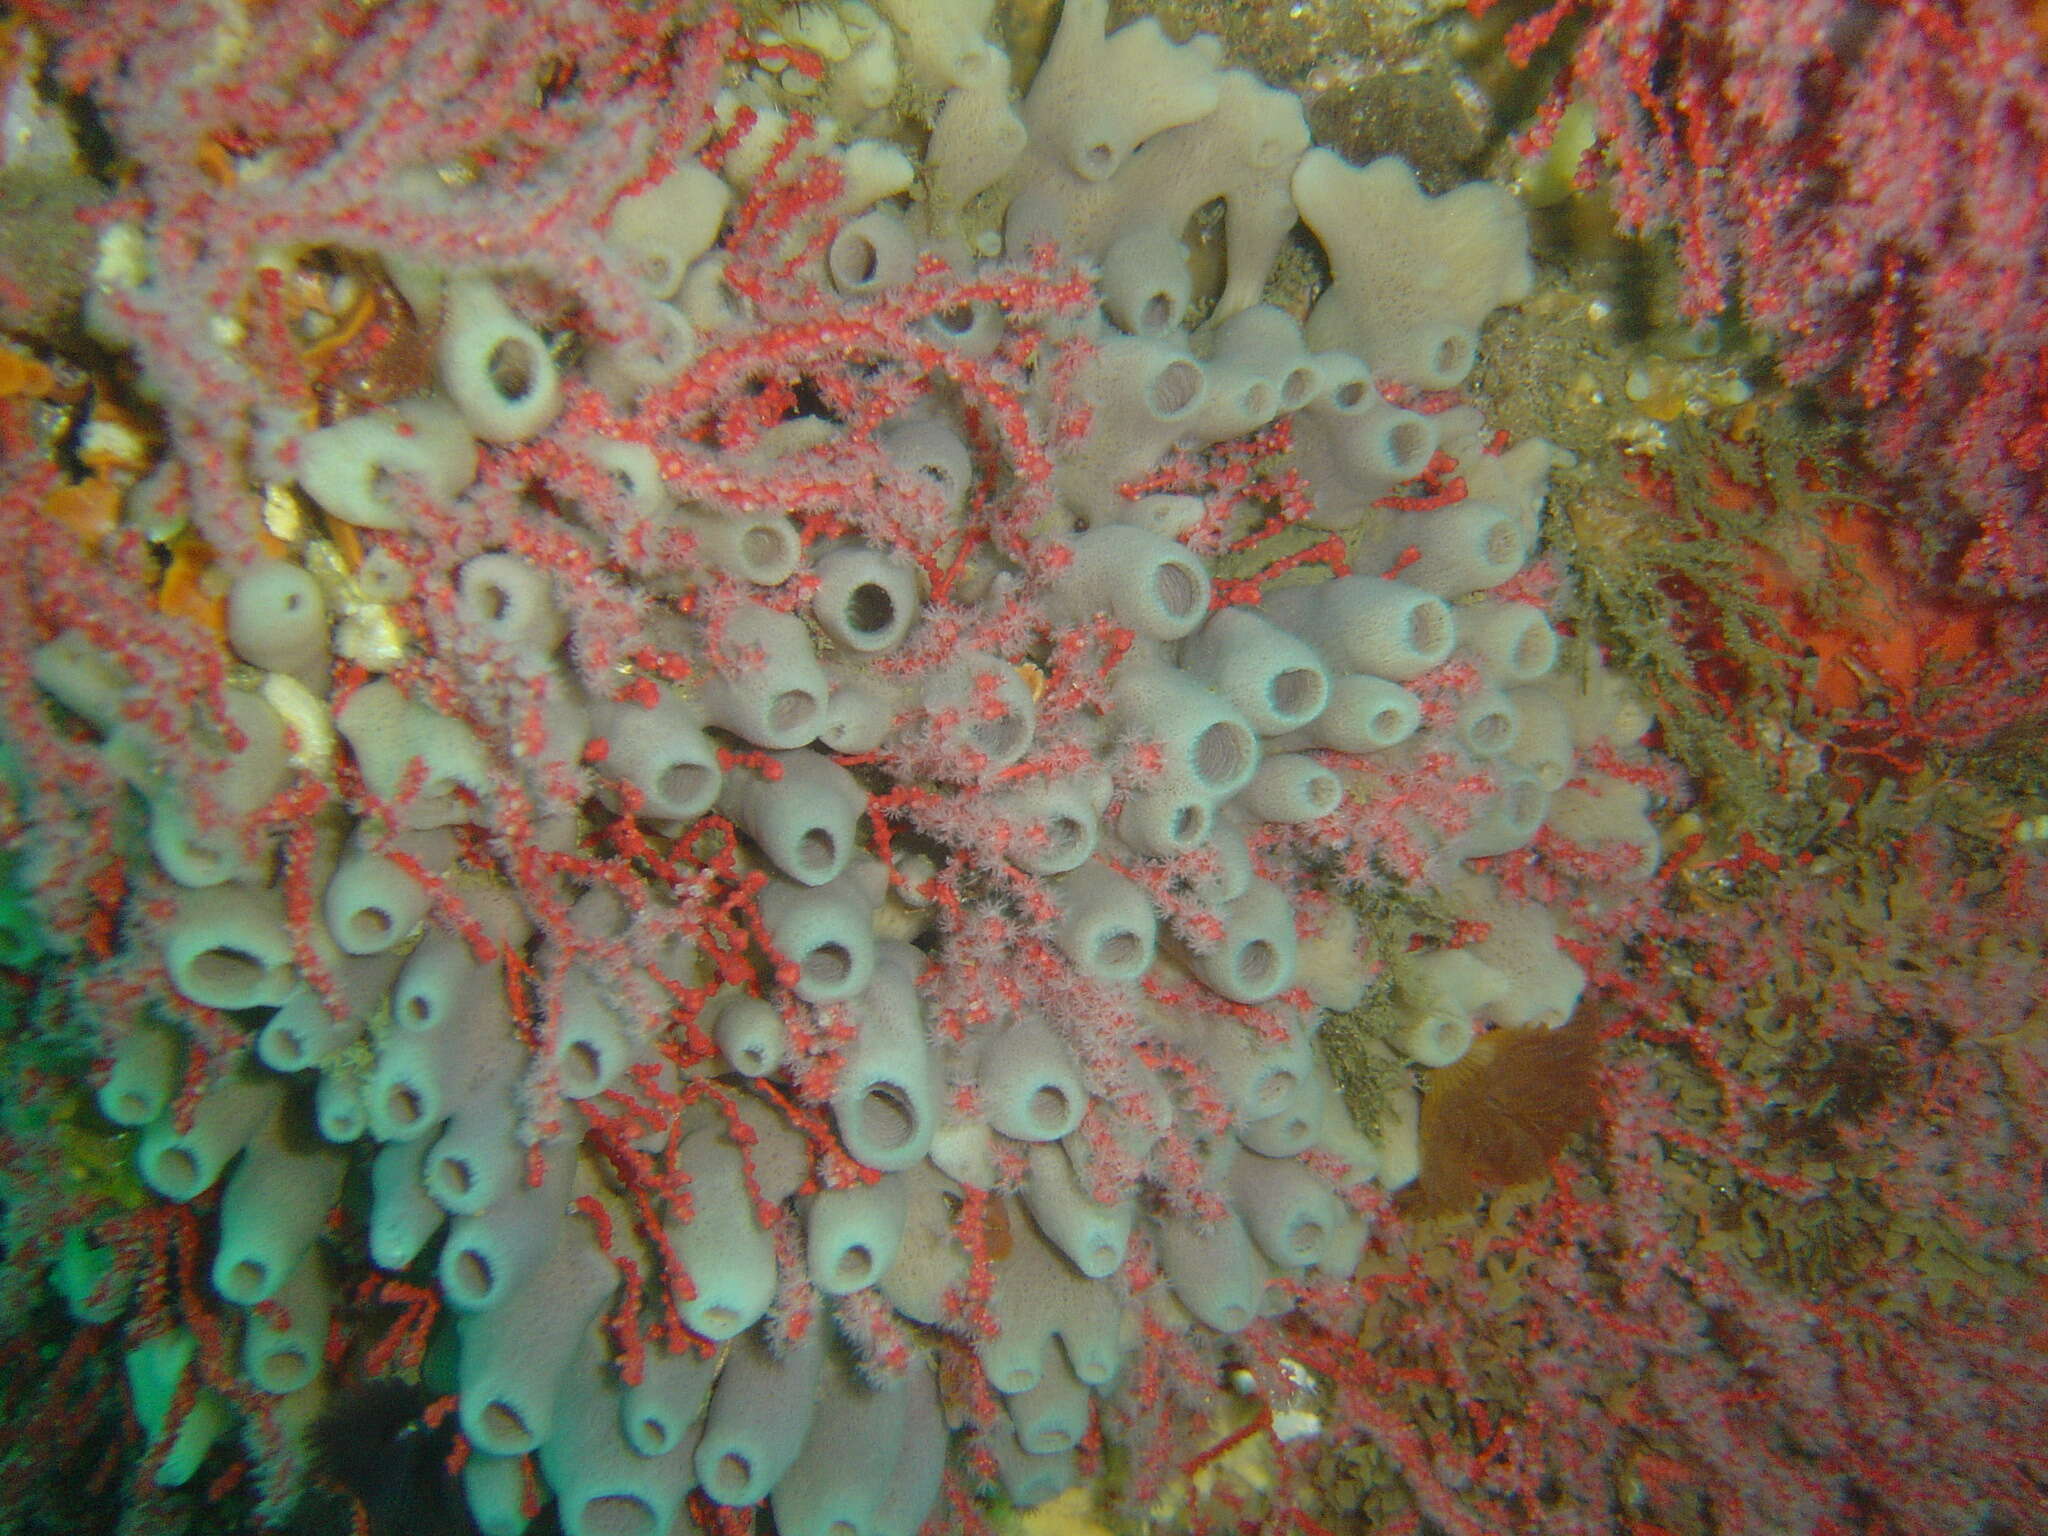 Image of Turret sponge